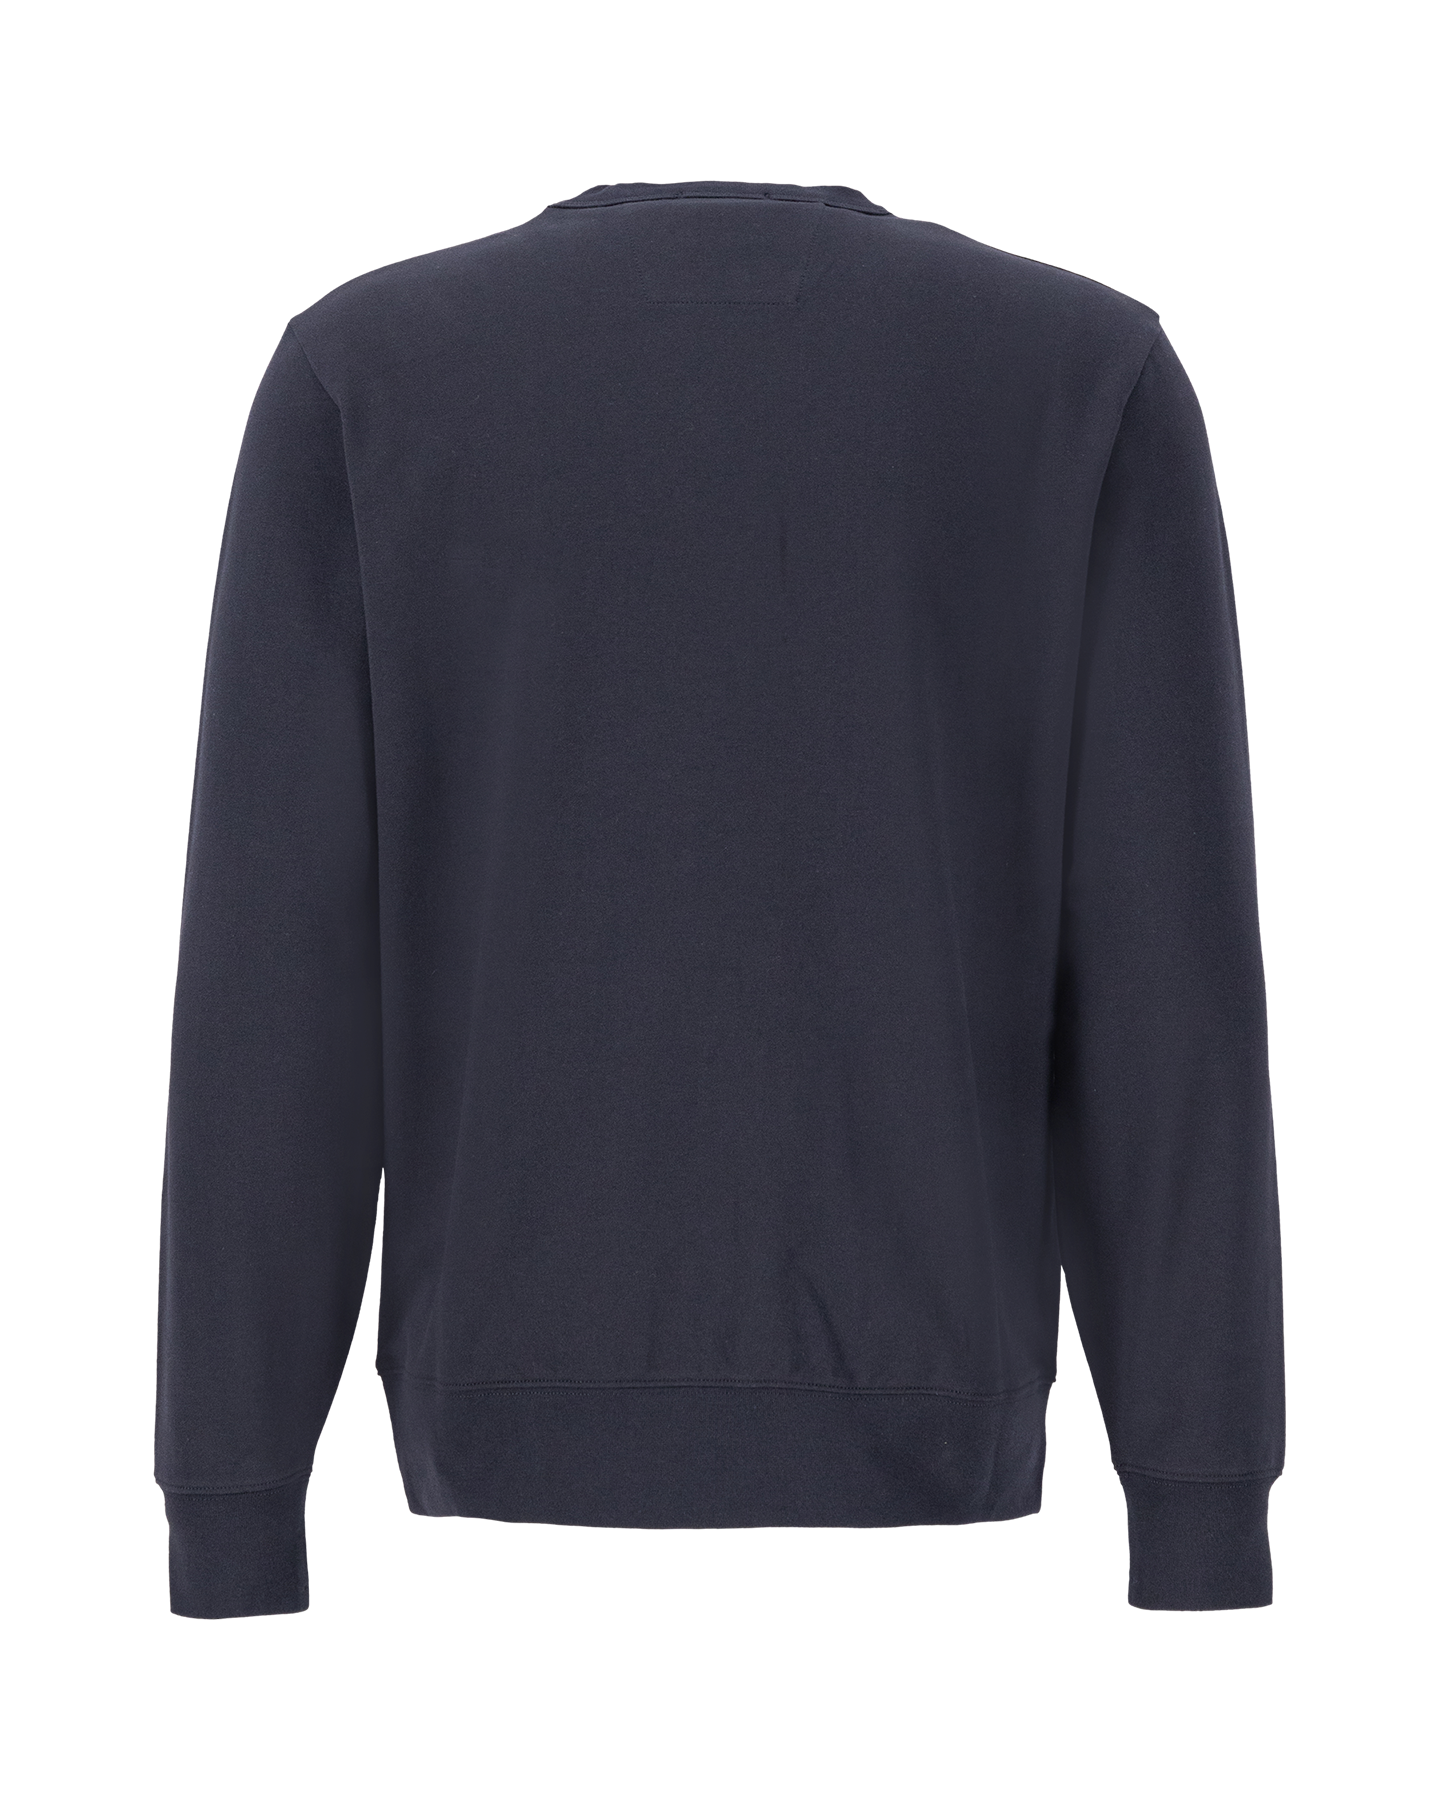 C.P. Company Metropolis Stretch Fleece Logo Sweatshirt NAVY 2